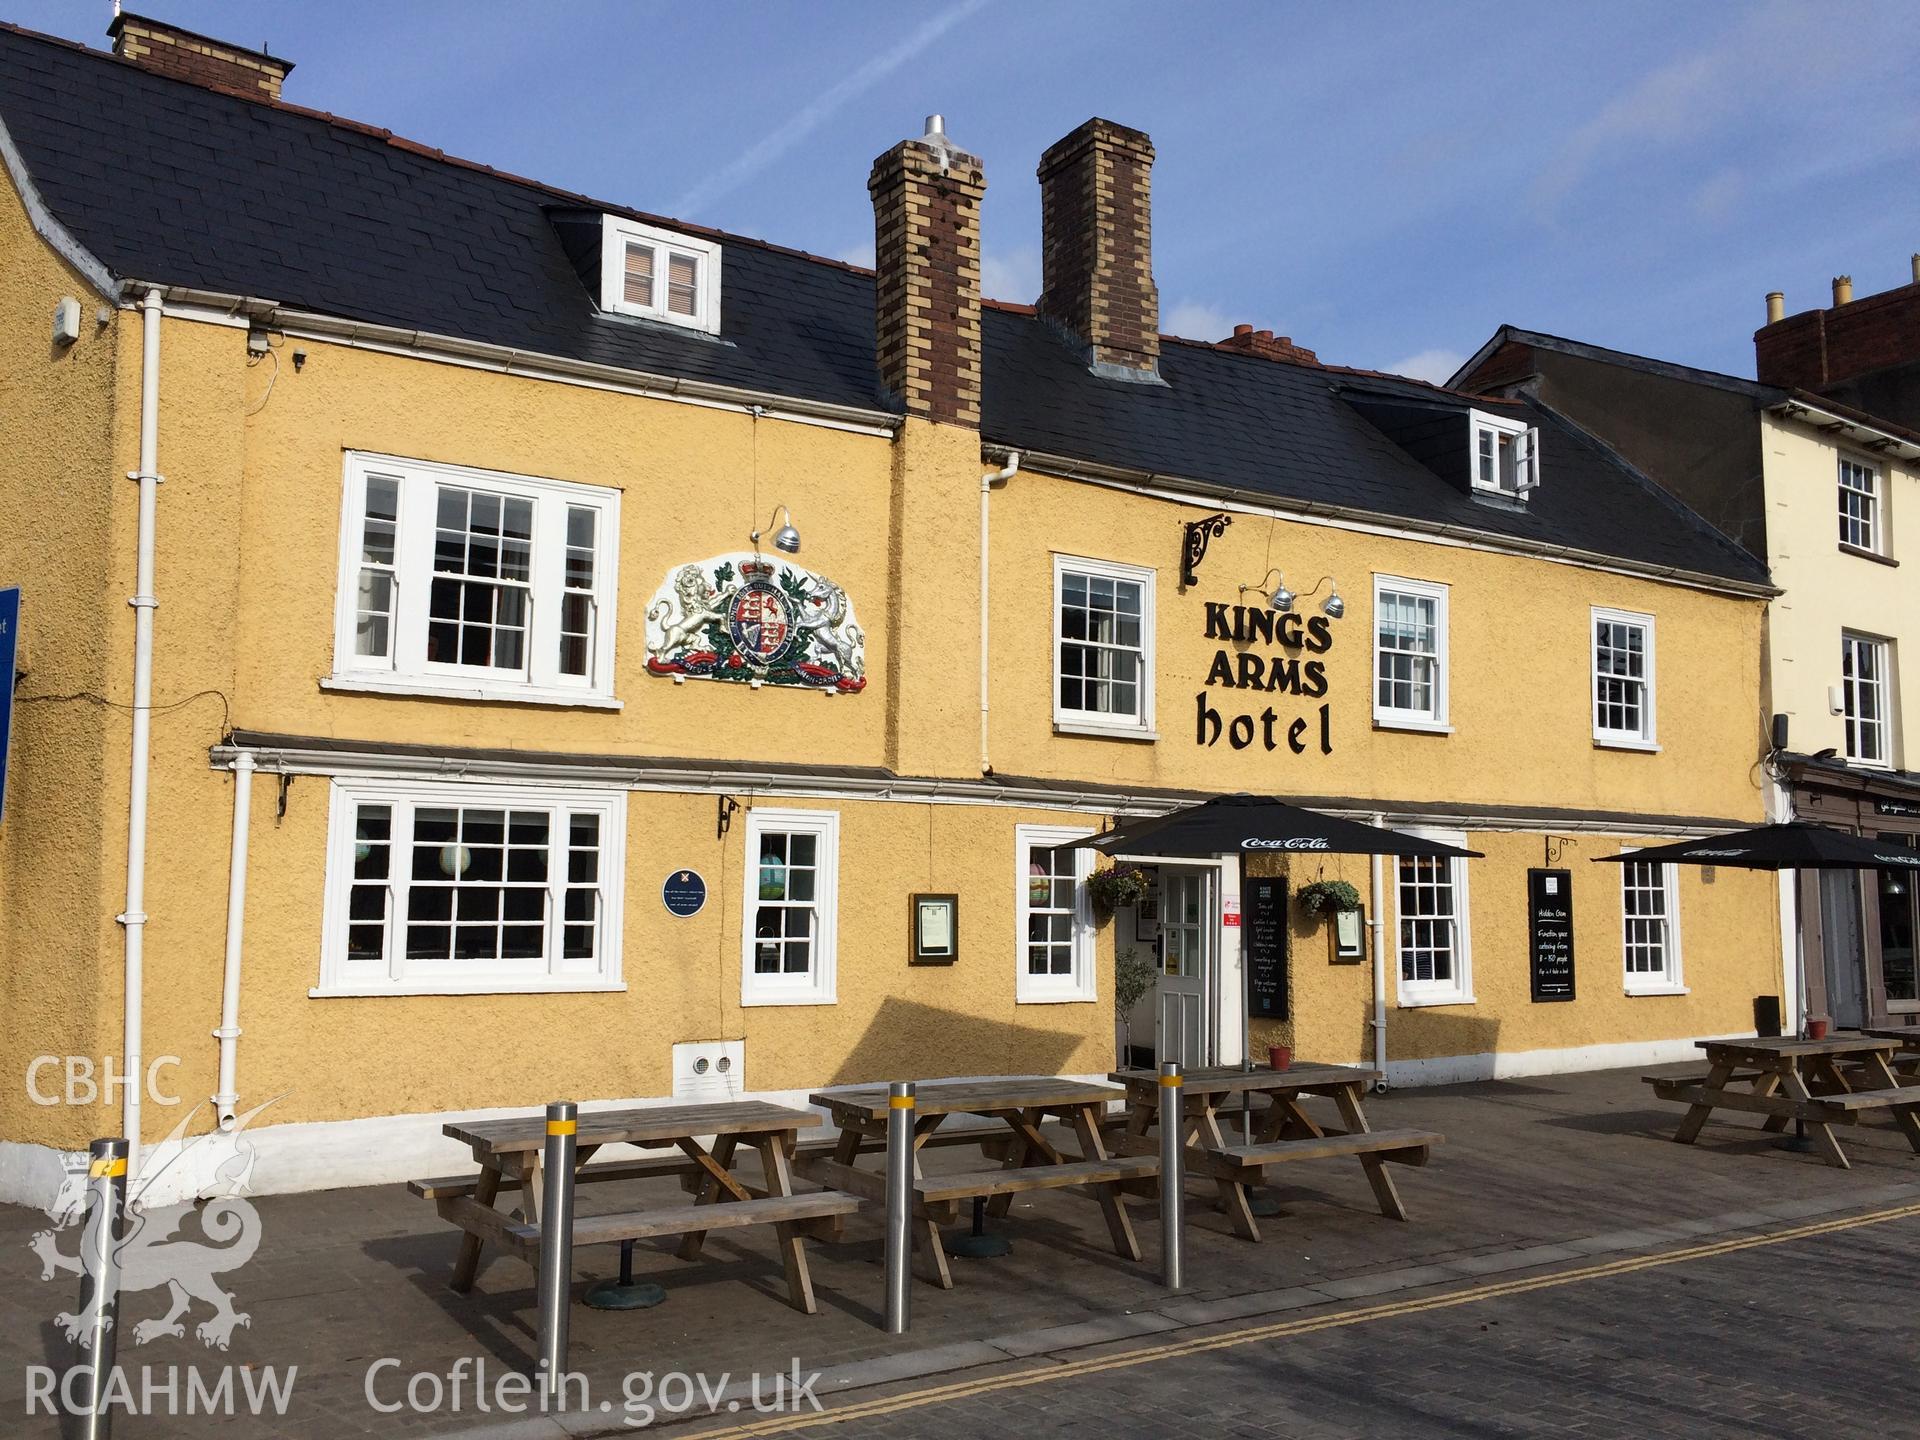 Colour photo showing view of Kings Arms Inn, Abergavenny taken by Paul R. Davis, 2018.